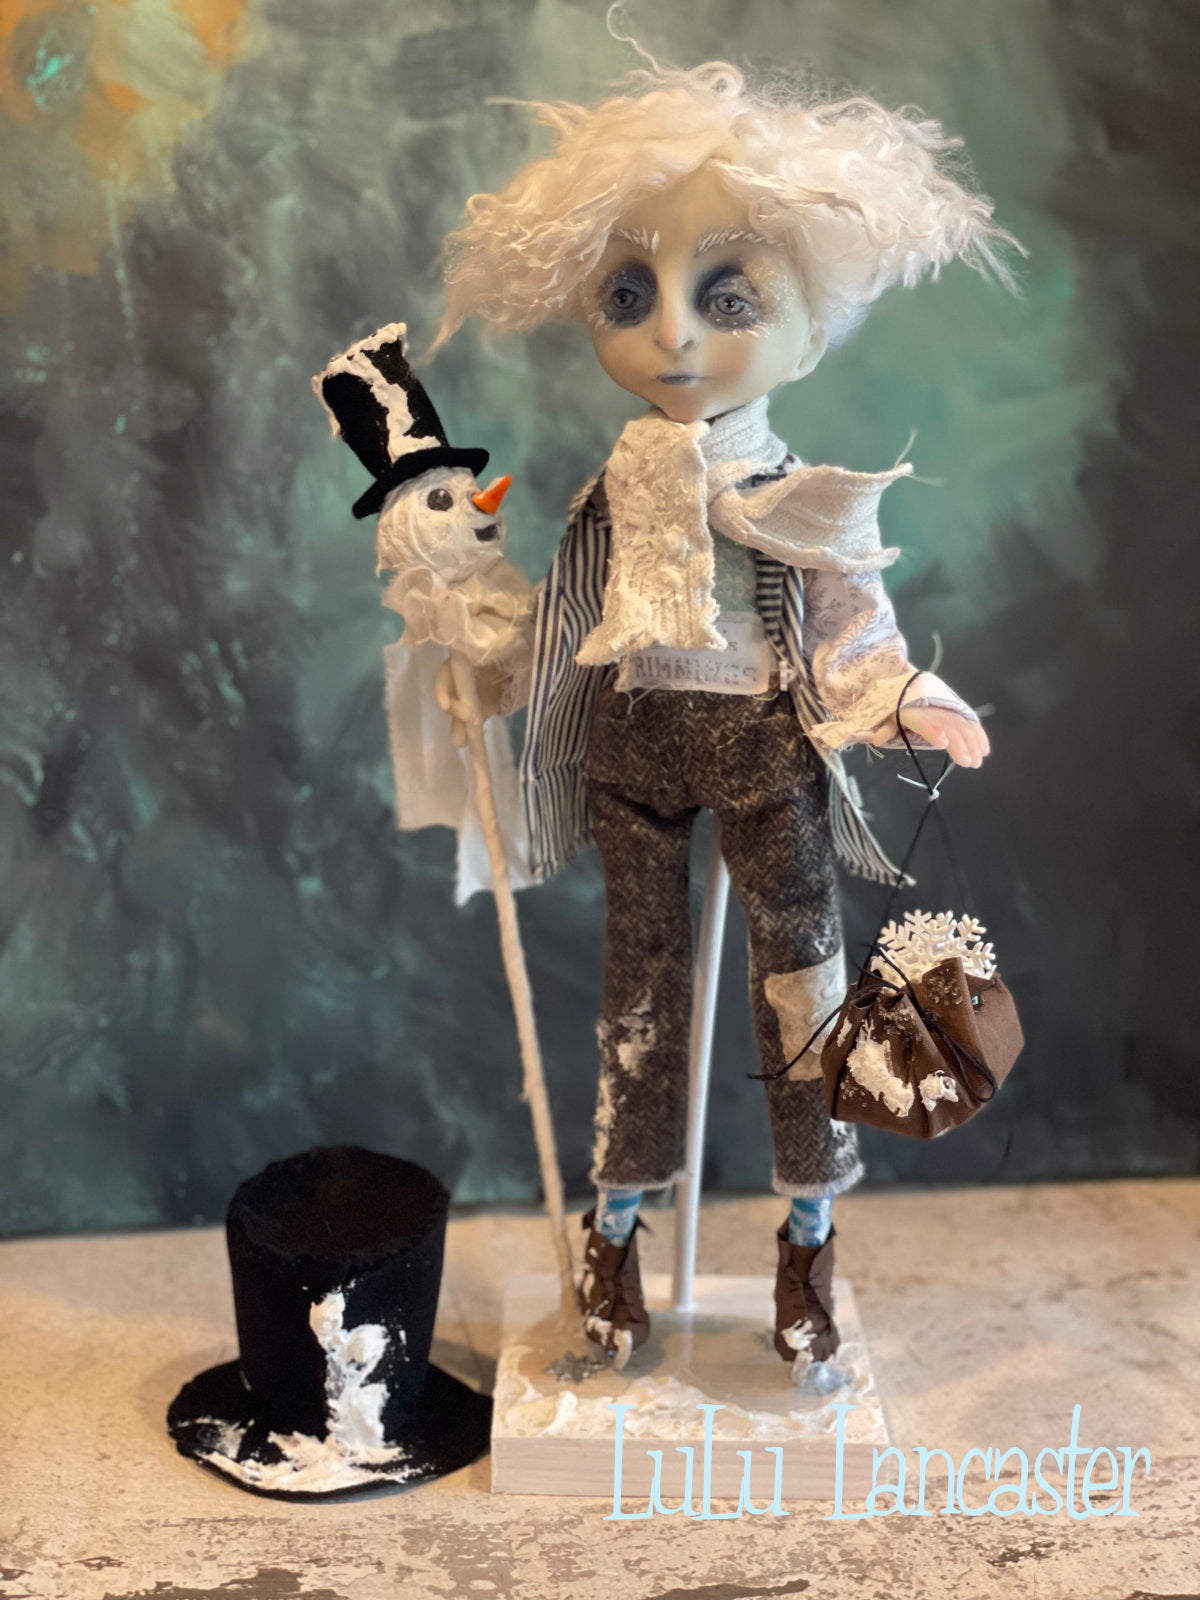 Jack Frost Original LuLu Lancaster Art Dolls